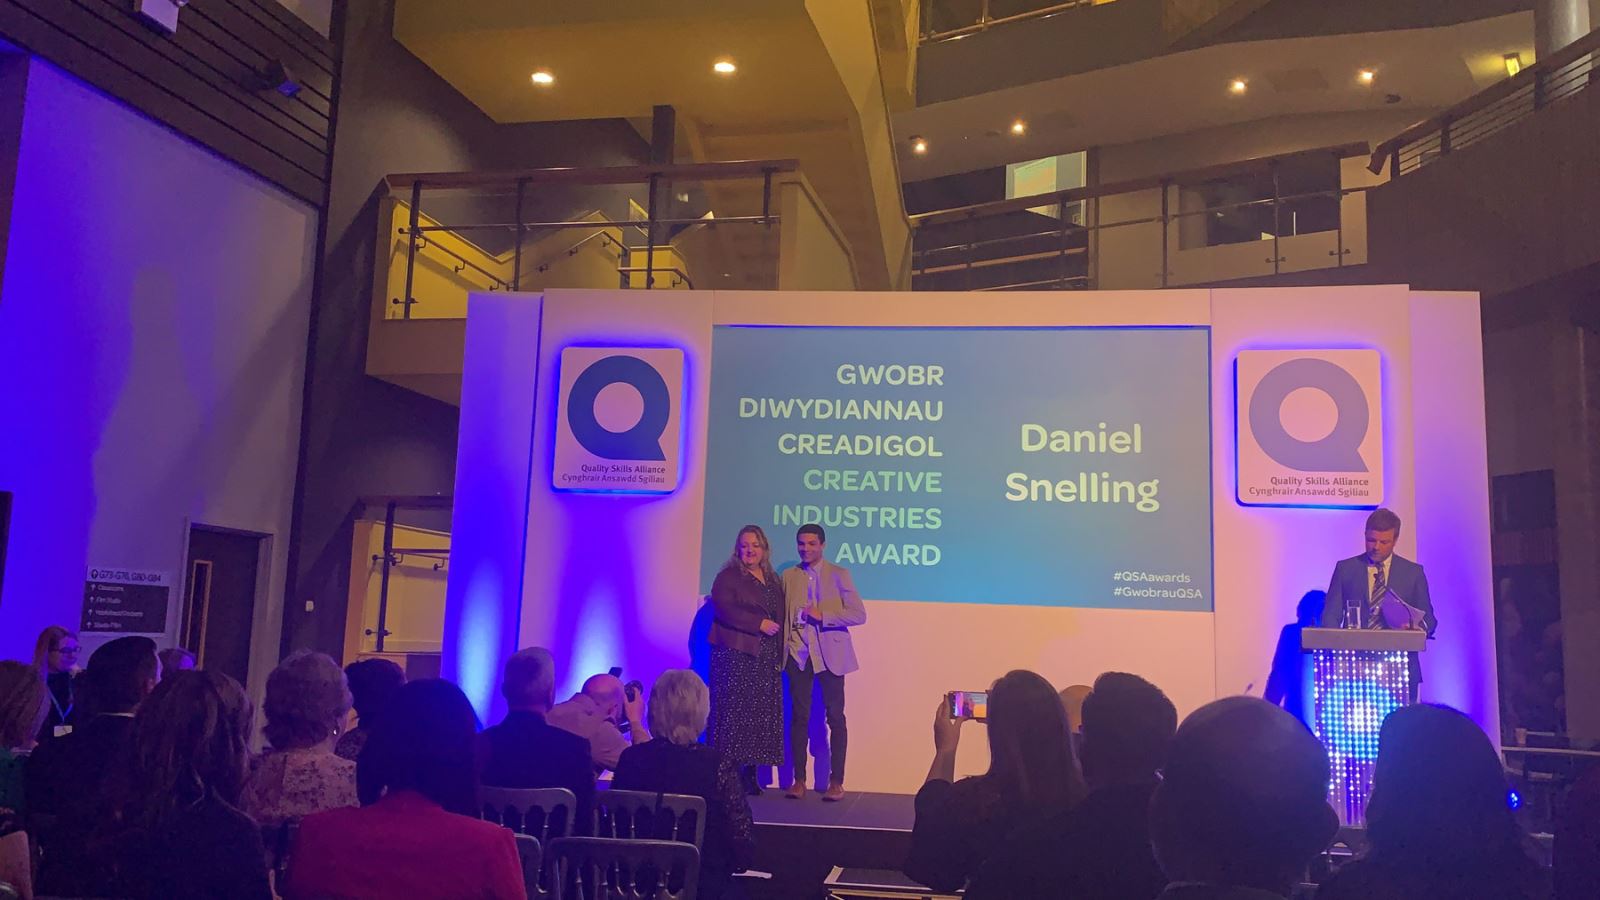 Daniel Snelling wins apprentice of the Year!